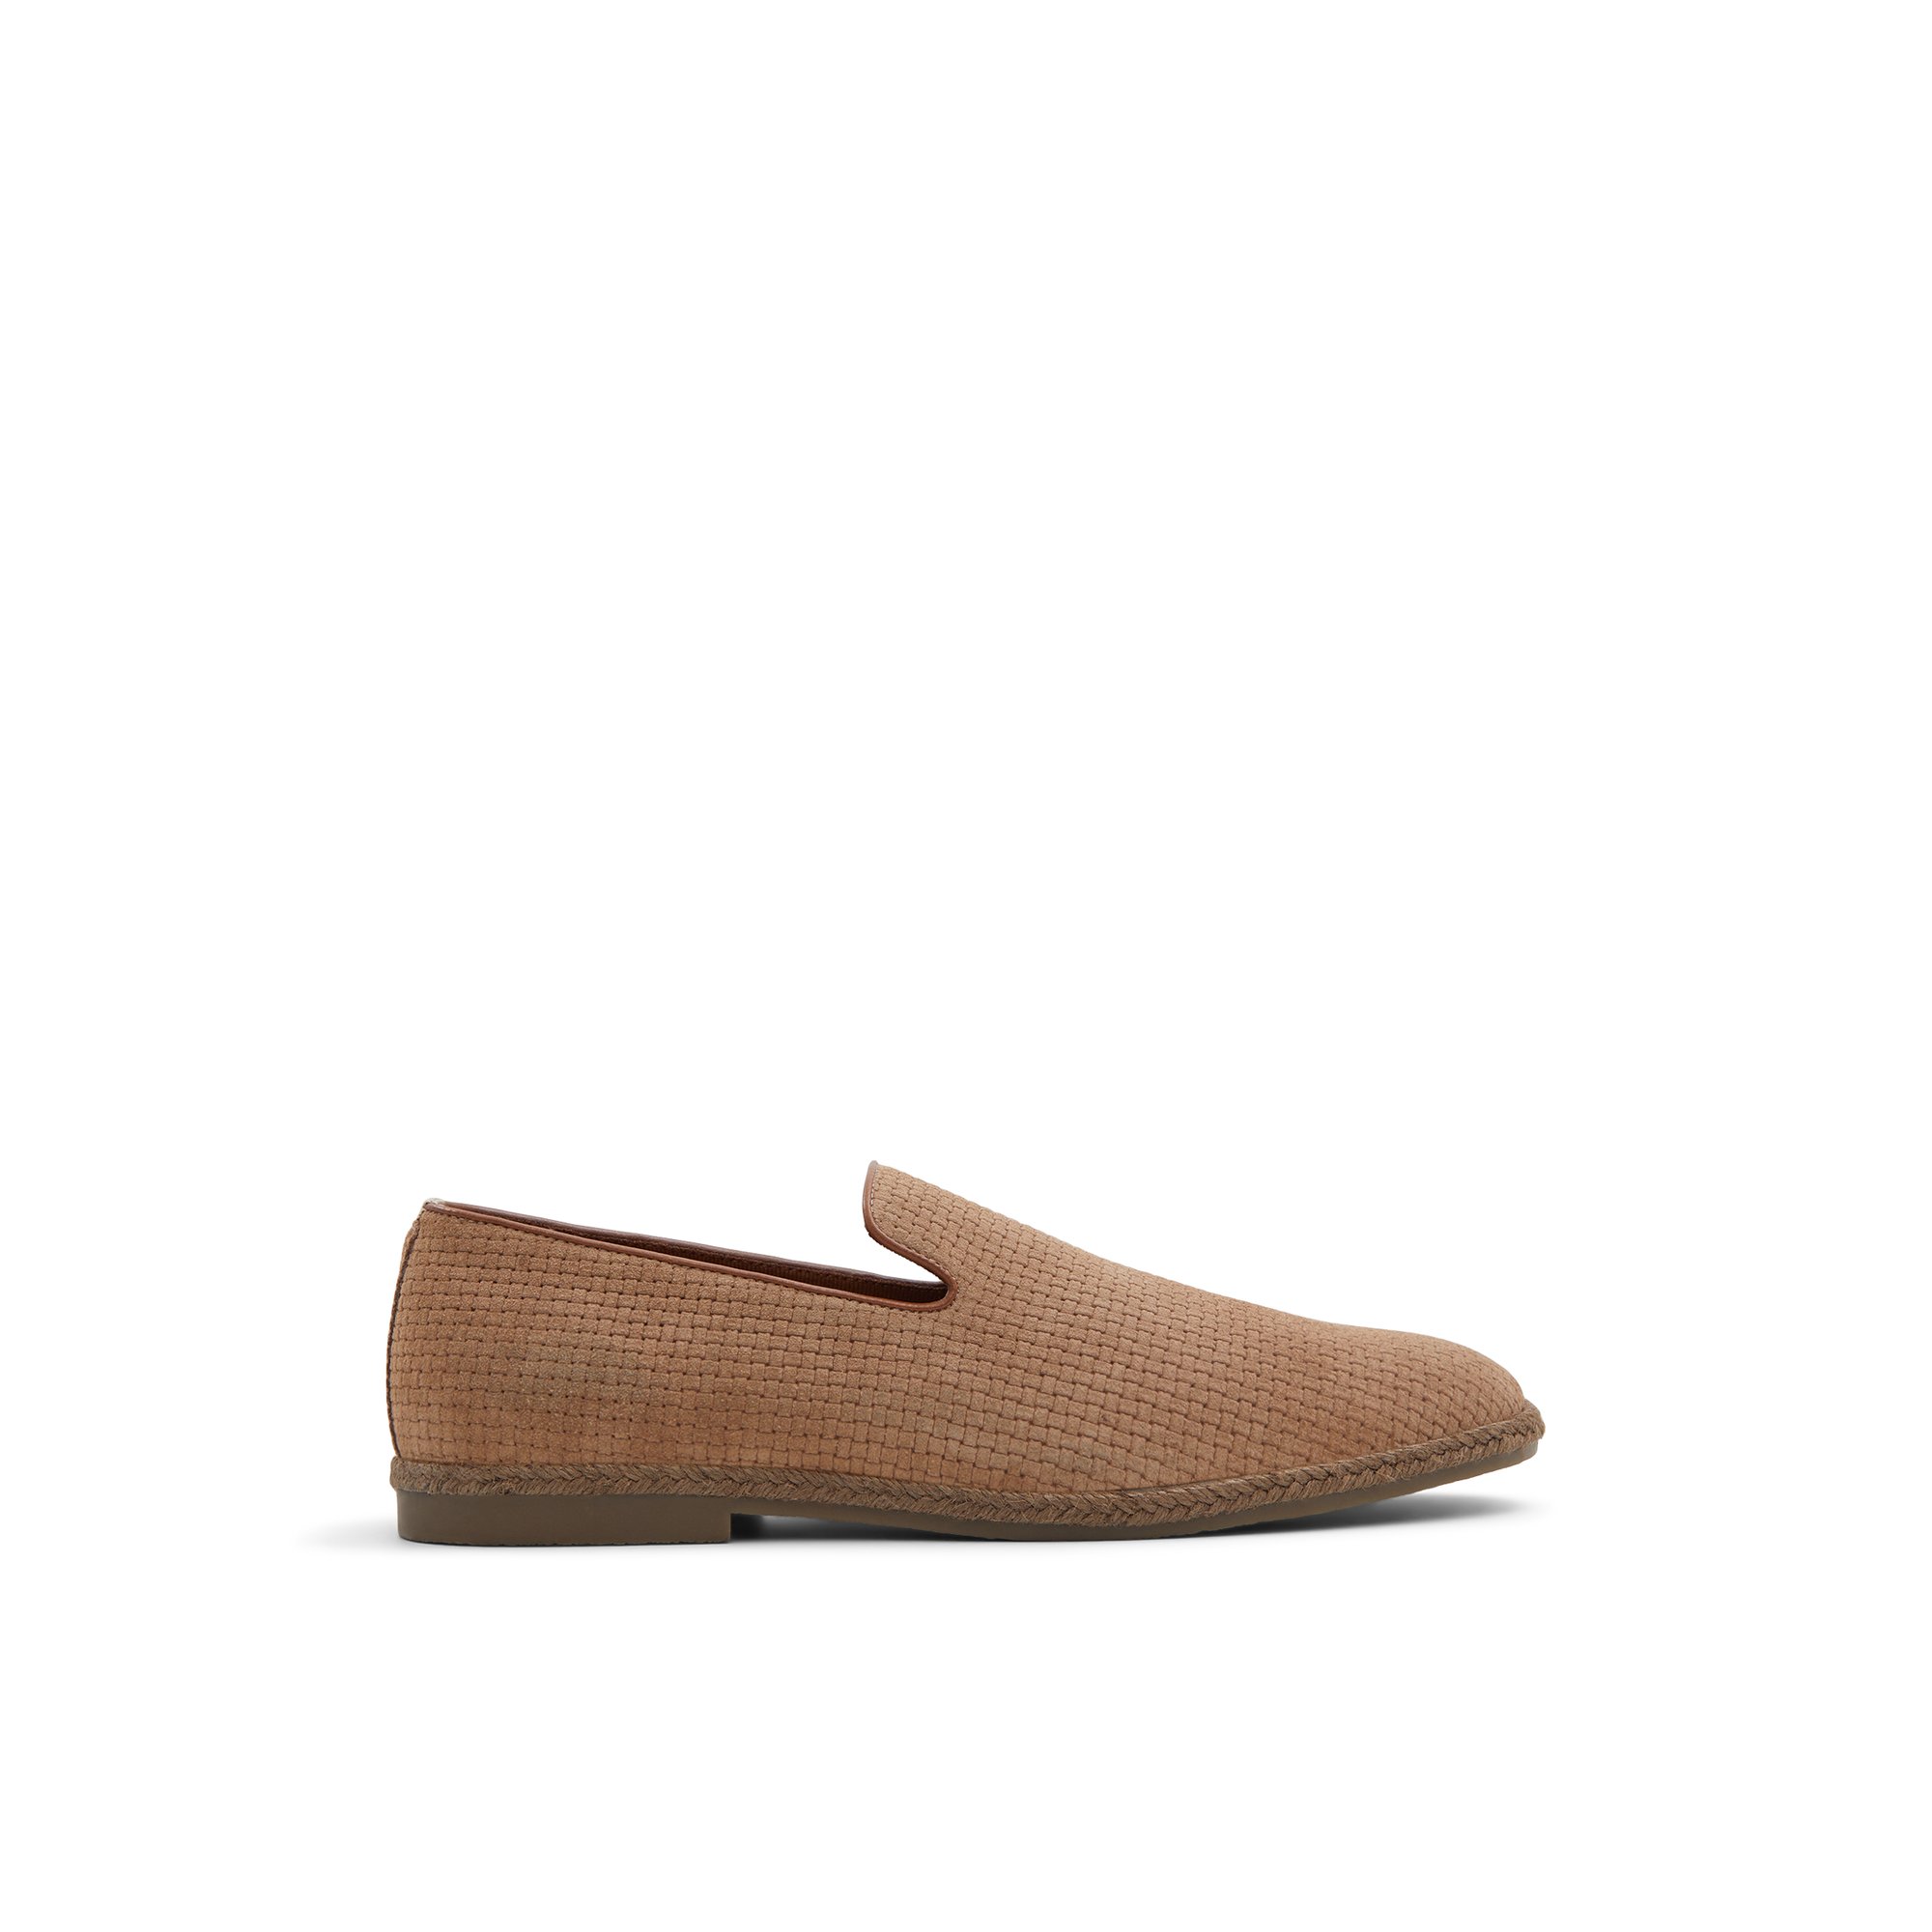 ALDO Comodo - Men's Casual Shoes - Brown